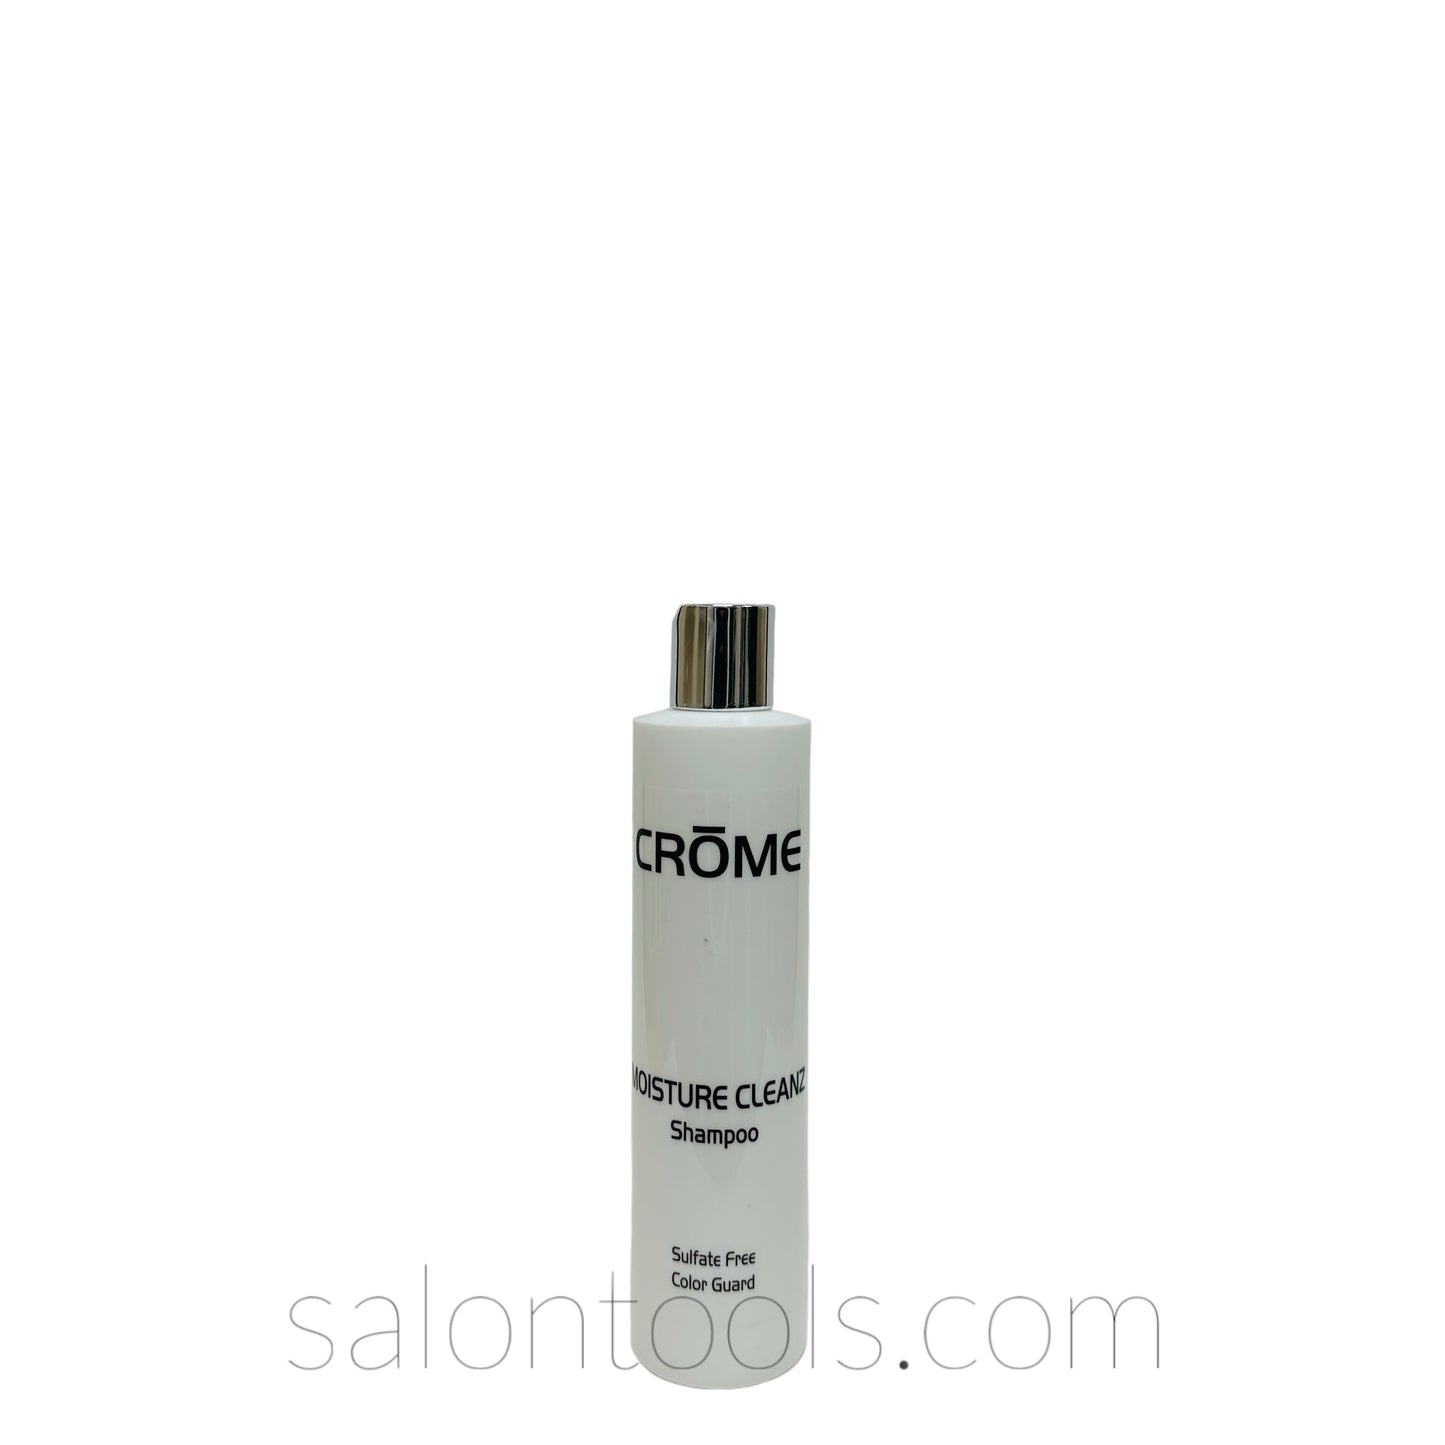 Crome Moisture Cleanz Shampoo 10oz